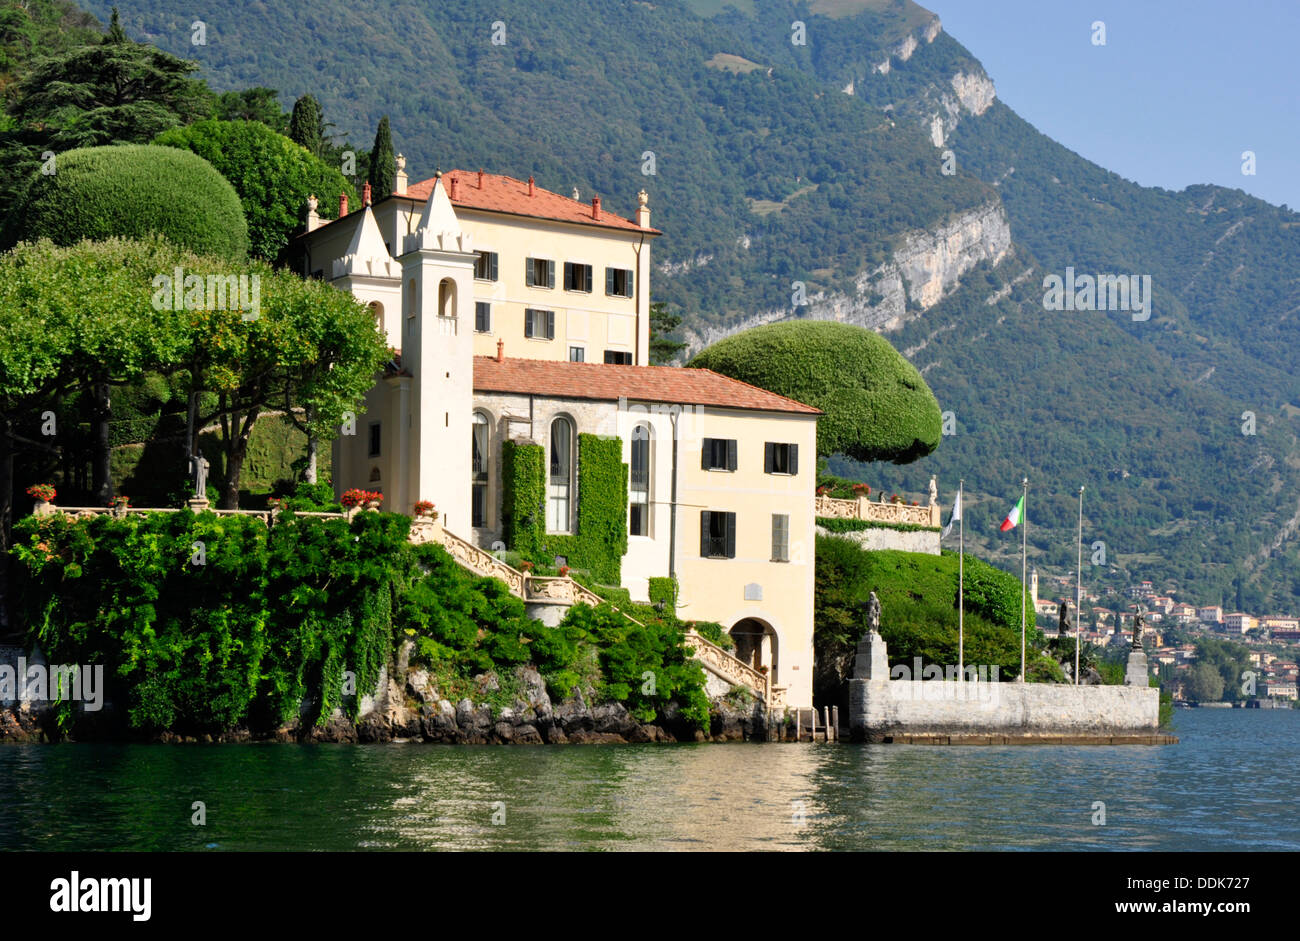 Italy Lake Como - Lenno - Villa del Balbianello - 18th cent - famous for its beautiful gardens and romantic lakeside location Stock Photo